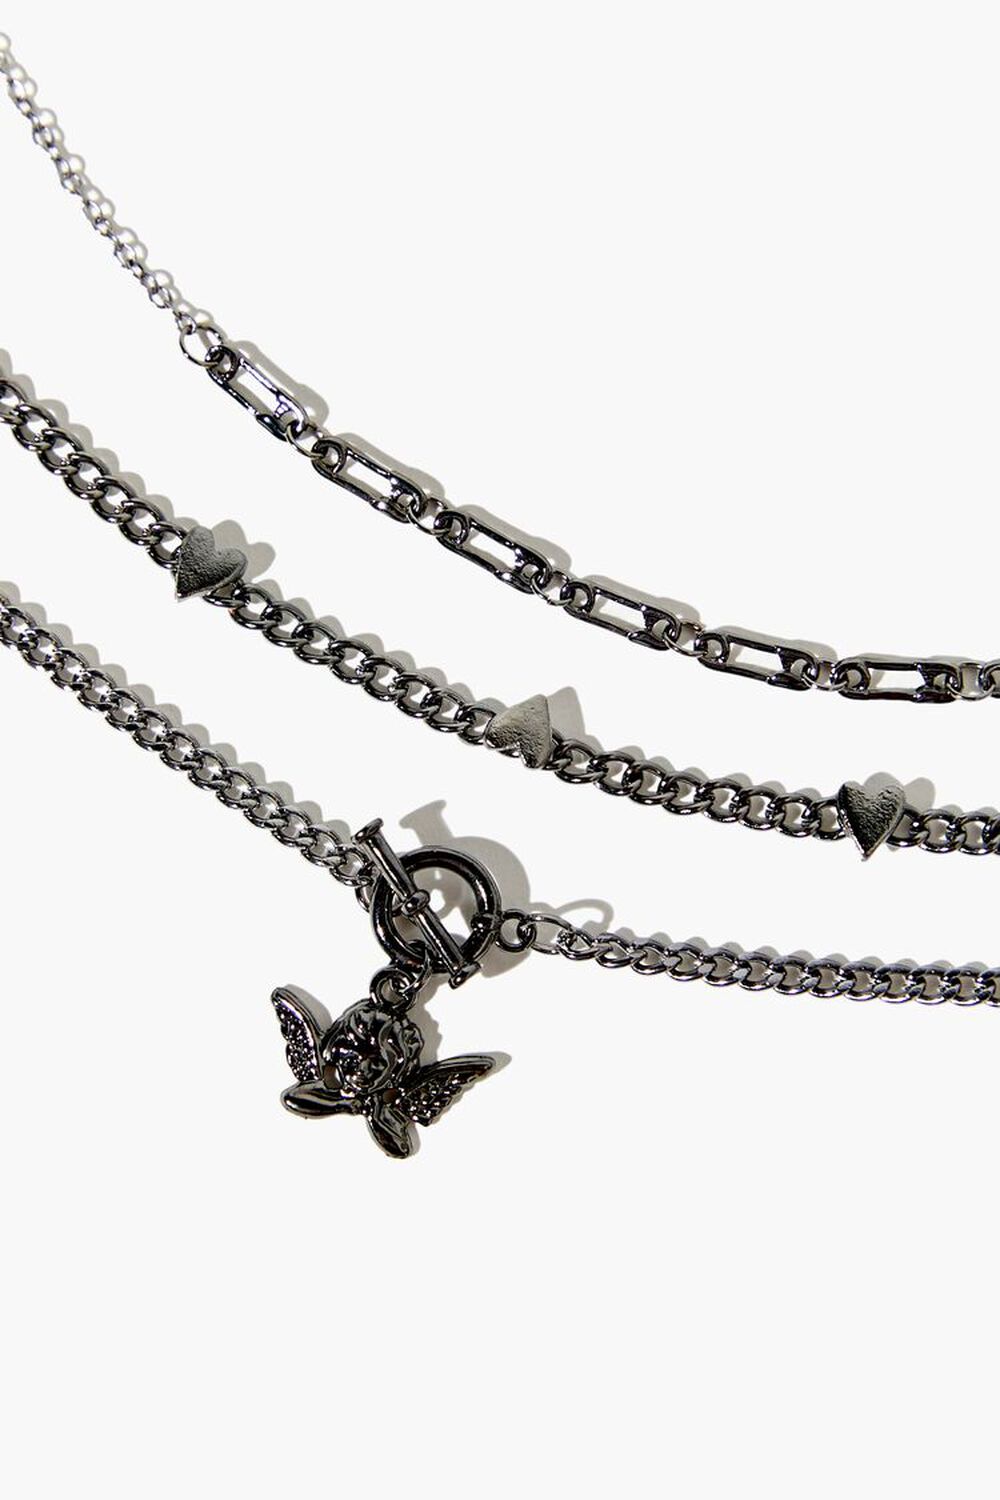 GUNMETAL Cherub Pendant Layered Necklace, image 1